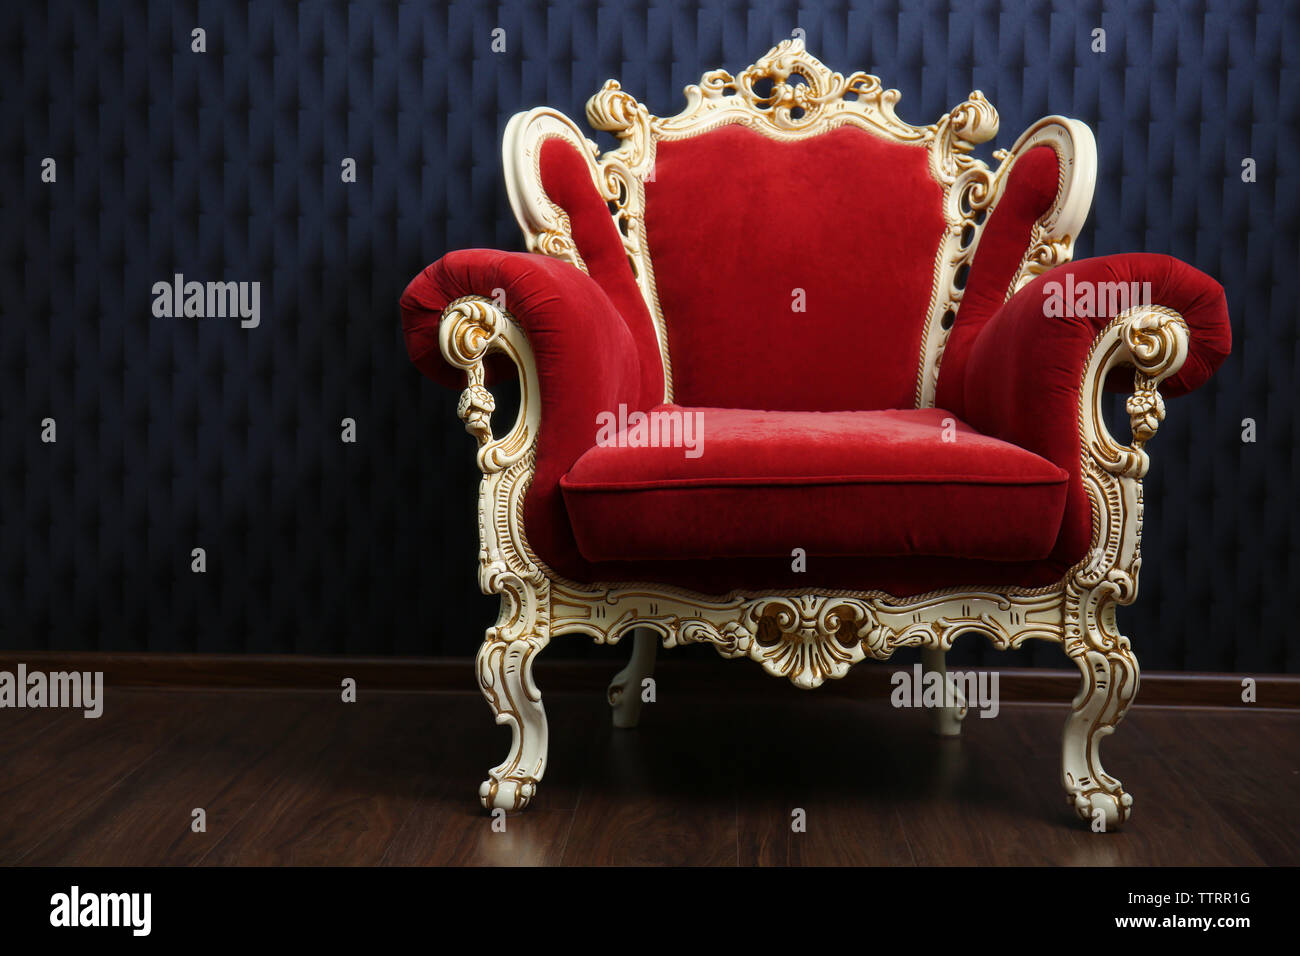 Luxury red armchair on dark background Stock Photo - Alamy